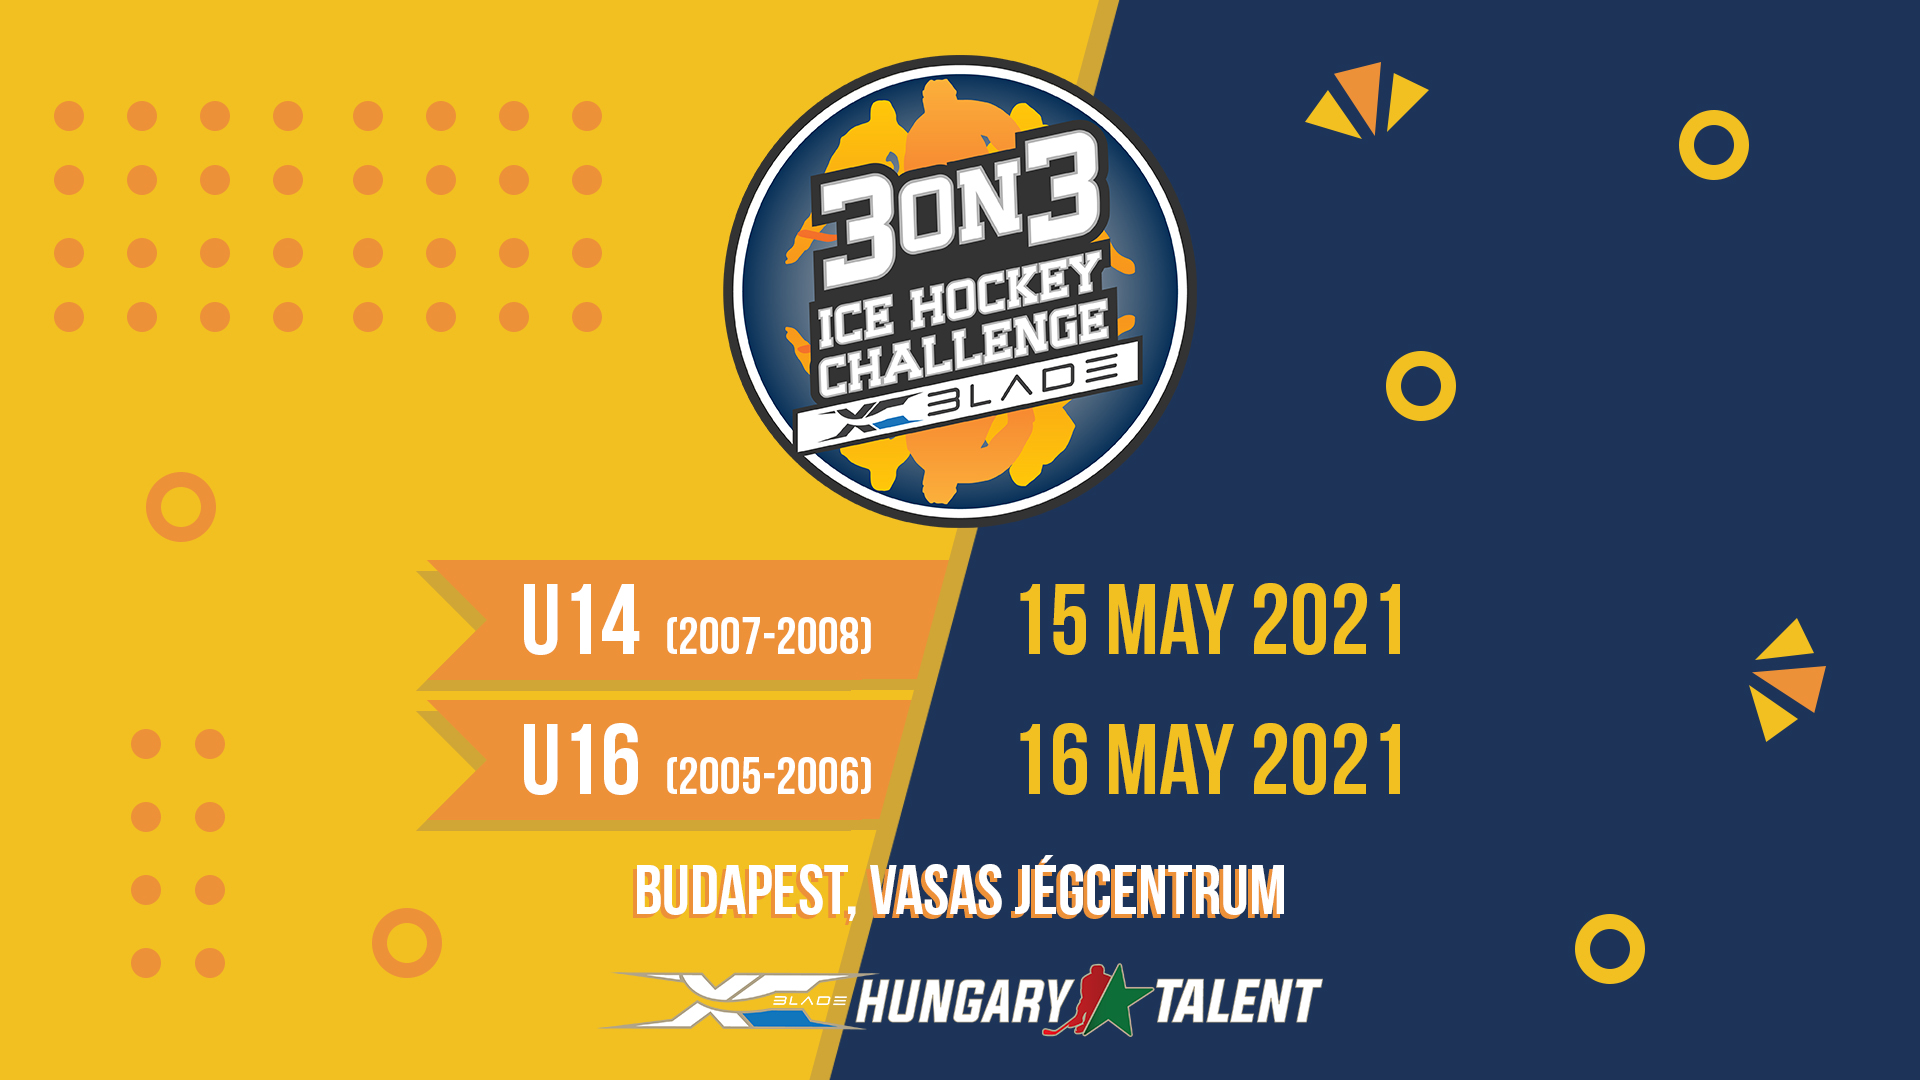 Harmadik alkalommal is XCBlade 3on3 Ice Hockey Challenge Budapesten!